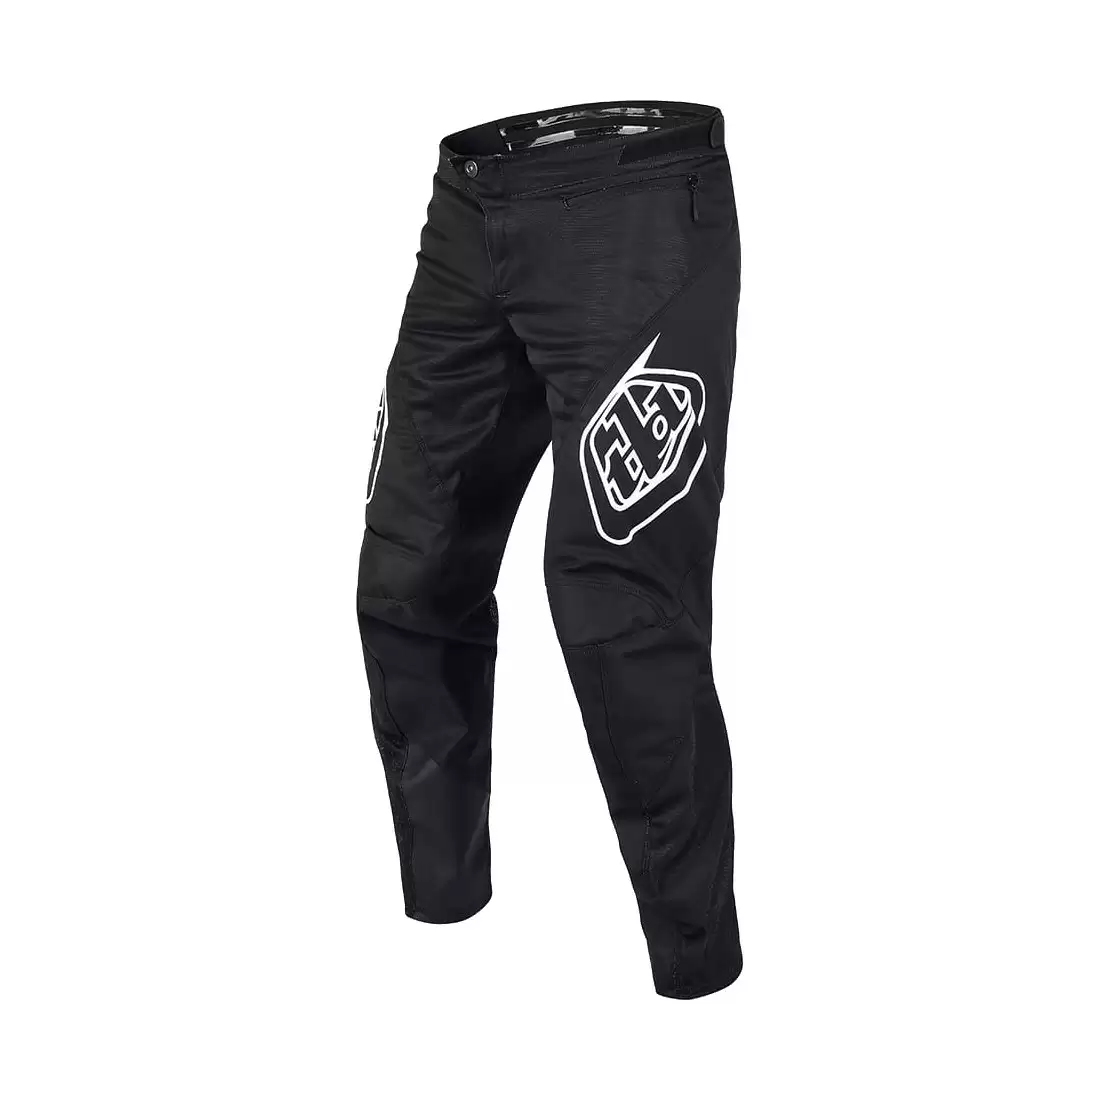 DH/Enduro Sprint MTB Long Pants Black Size XS - image